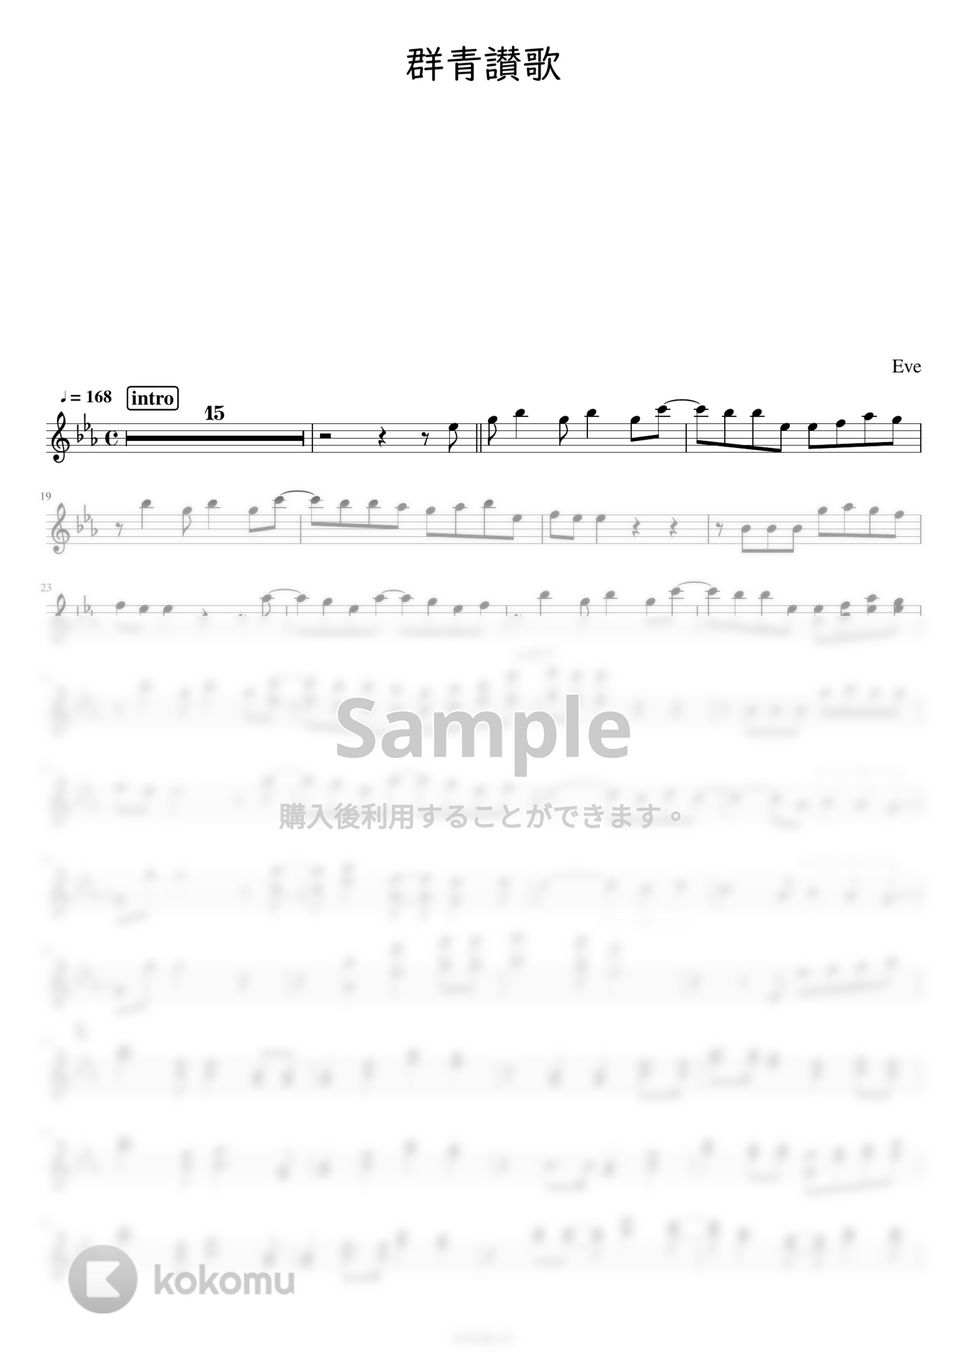 Eve - 群青讃歌 (フルート用メロディー譜 / ハモリ入り) by 採譜：もりたあいか